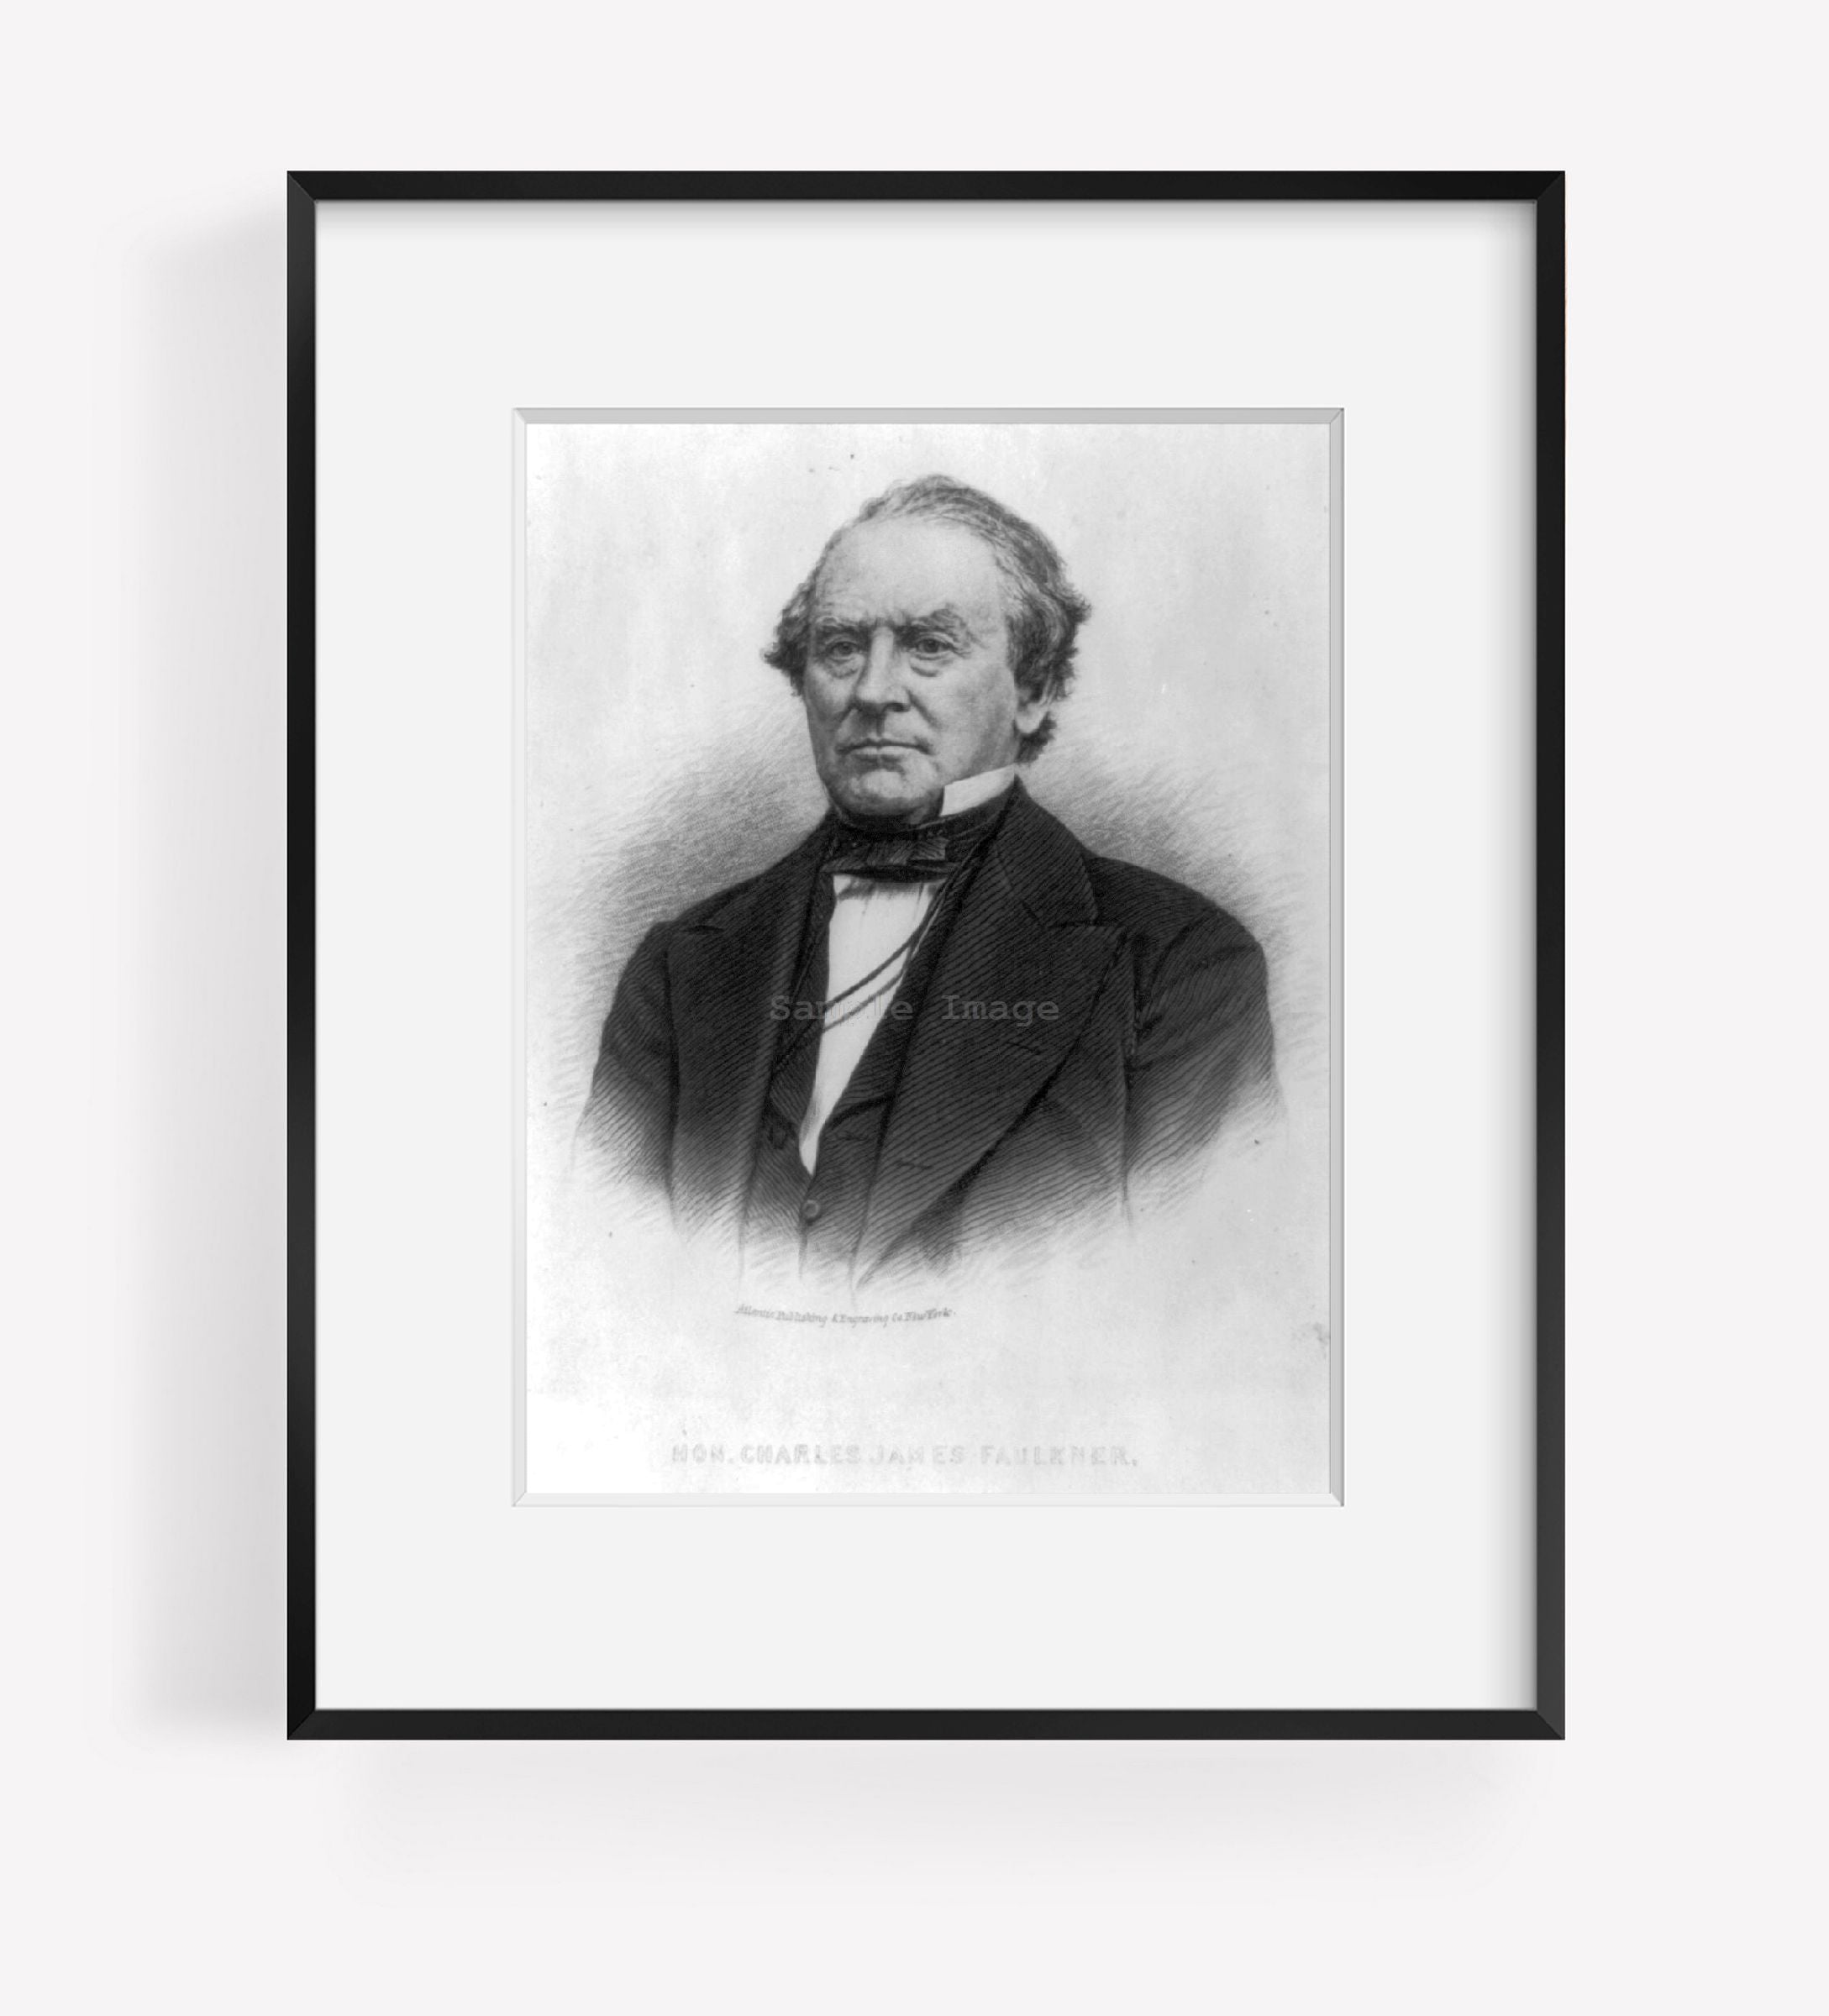 Photograph of Hon. Charles James Faulkner